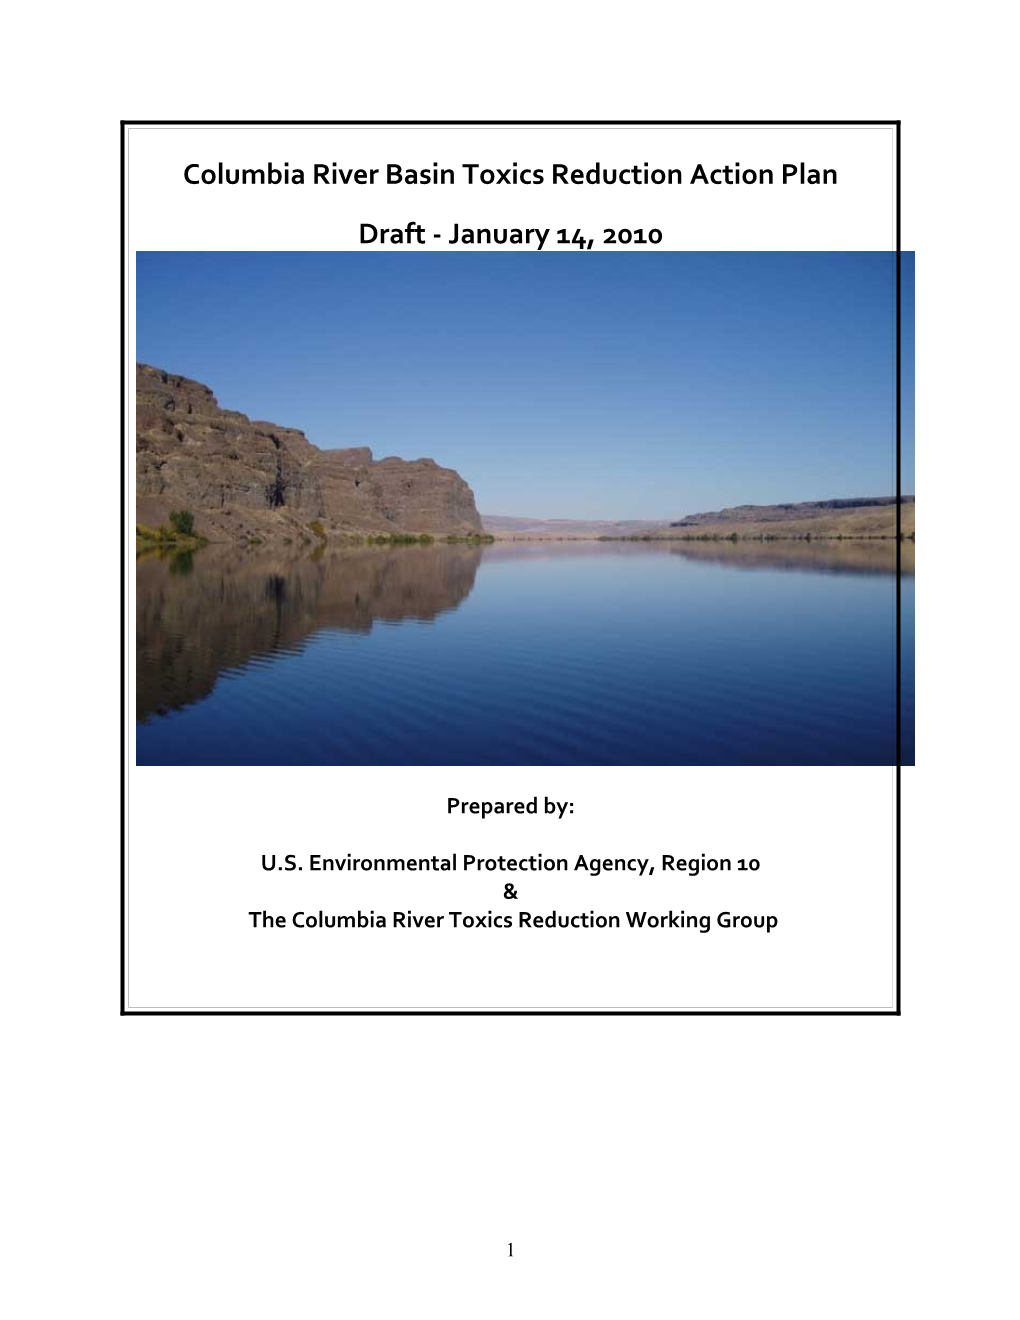 Columbia River Toxics Reduction Working Group: Workplan Development